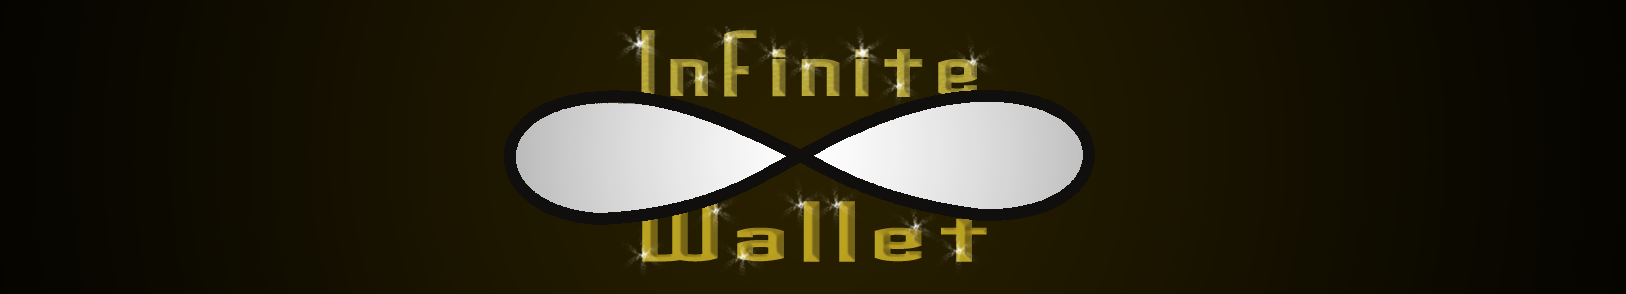 Infinite Wallet Header